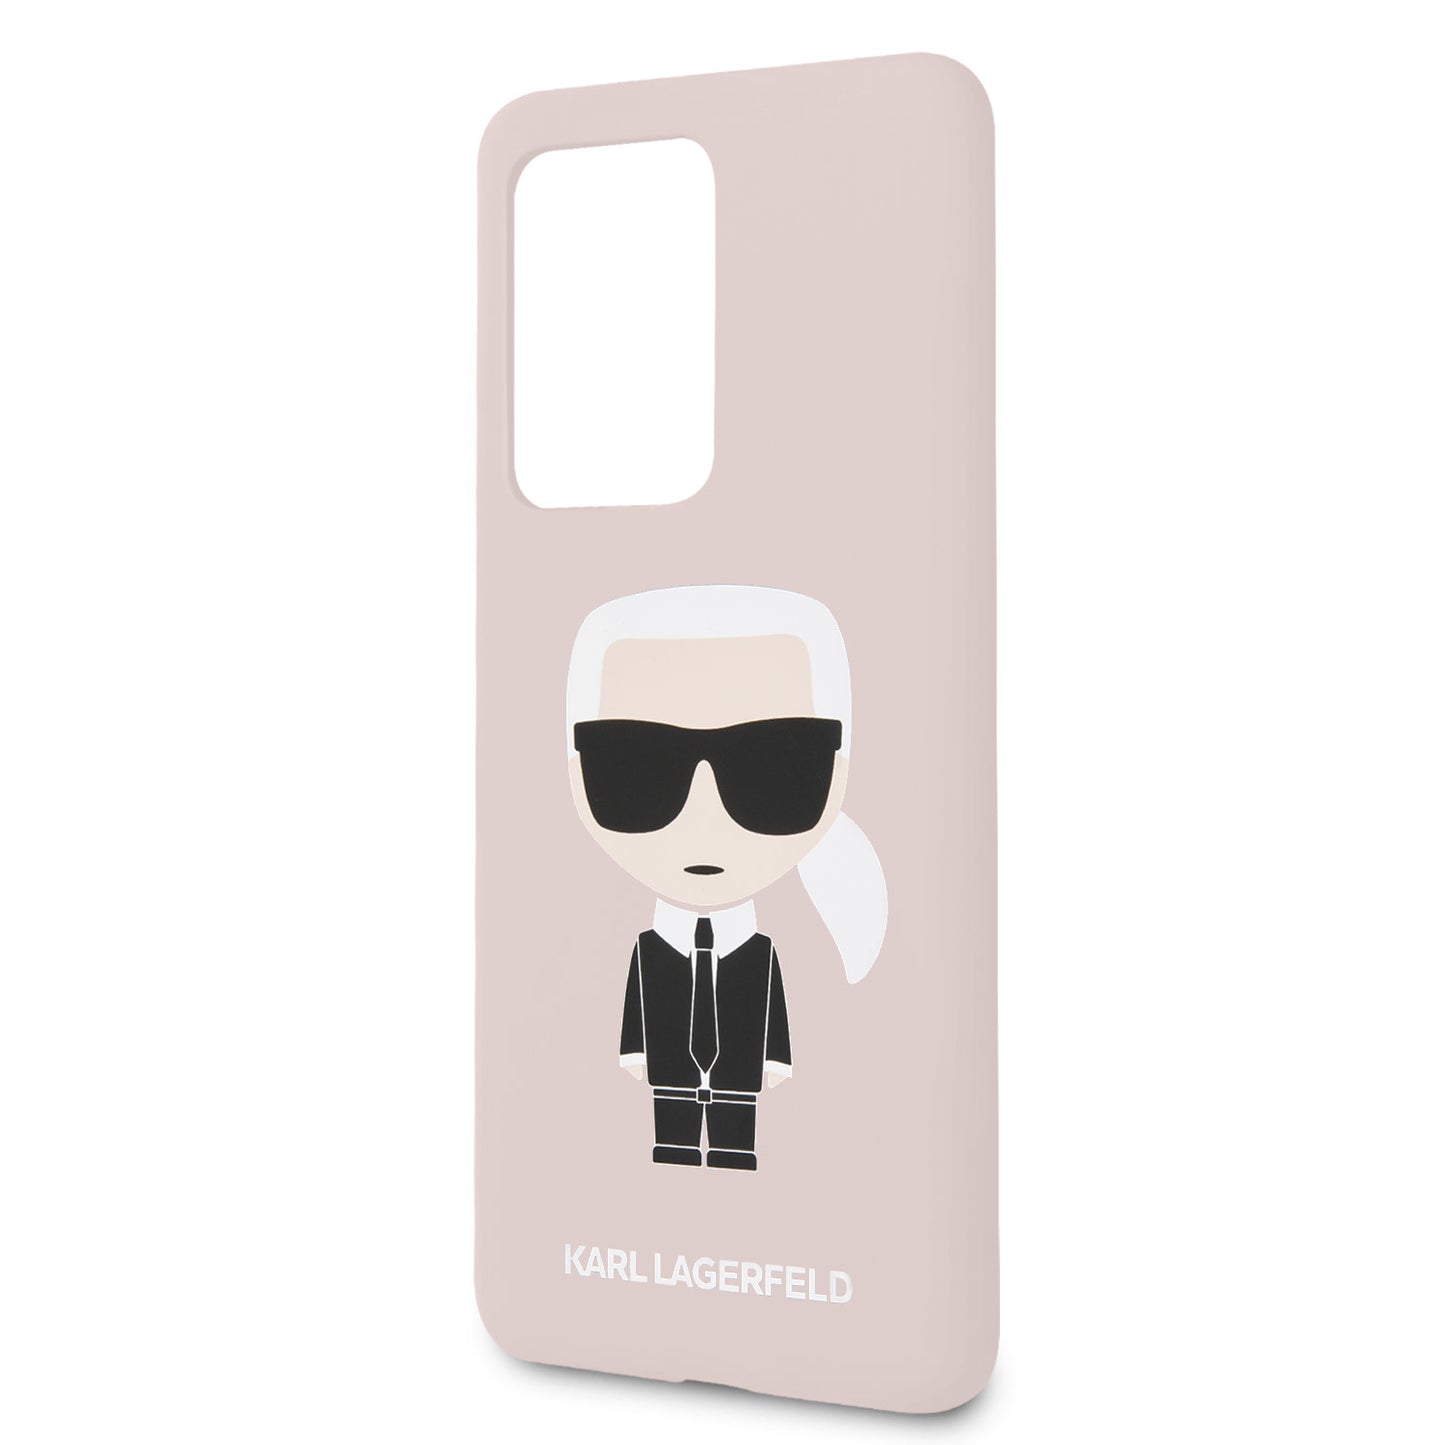 Karl Lagerfeld Samsung S20 Ultra Backcover - Karl - Roze